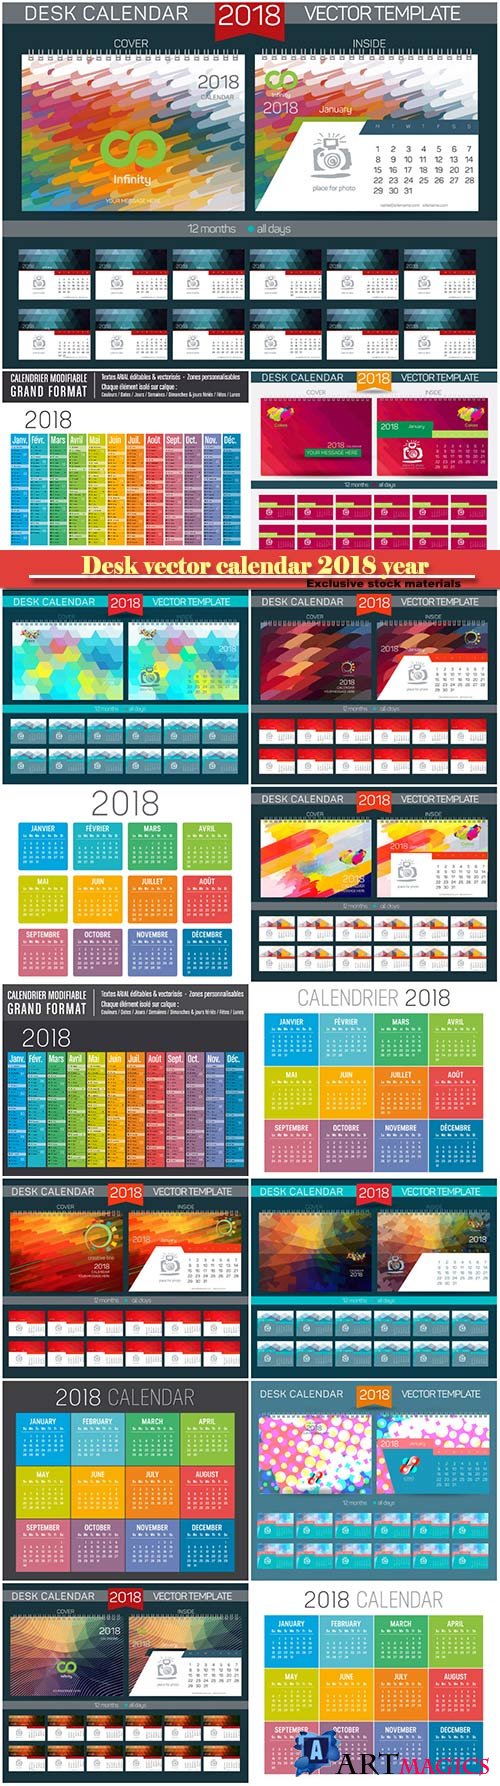 Desk vector calendar design templatefor 2018 year # 6